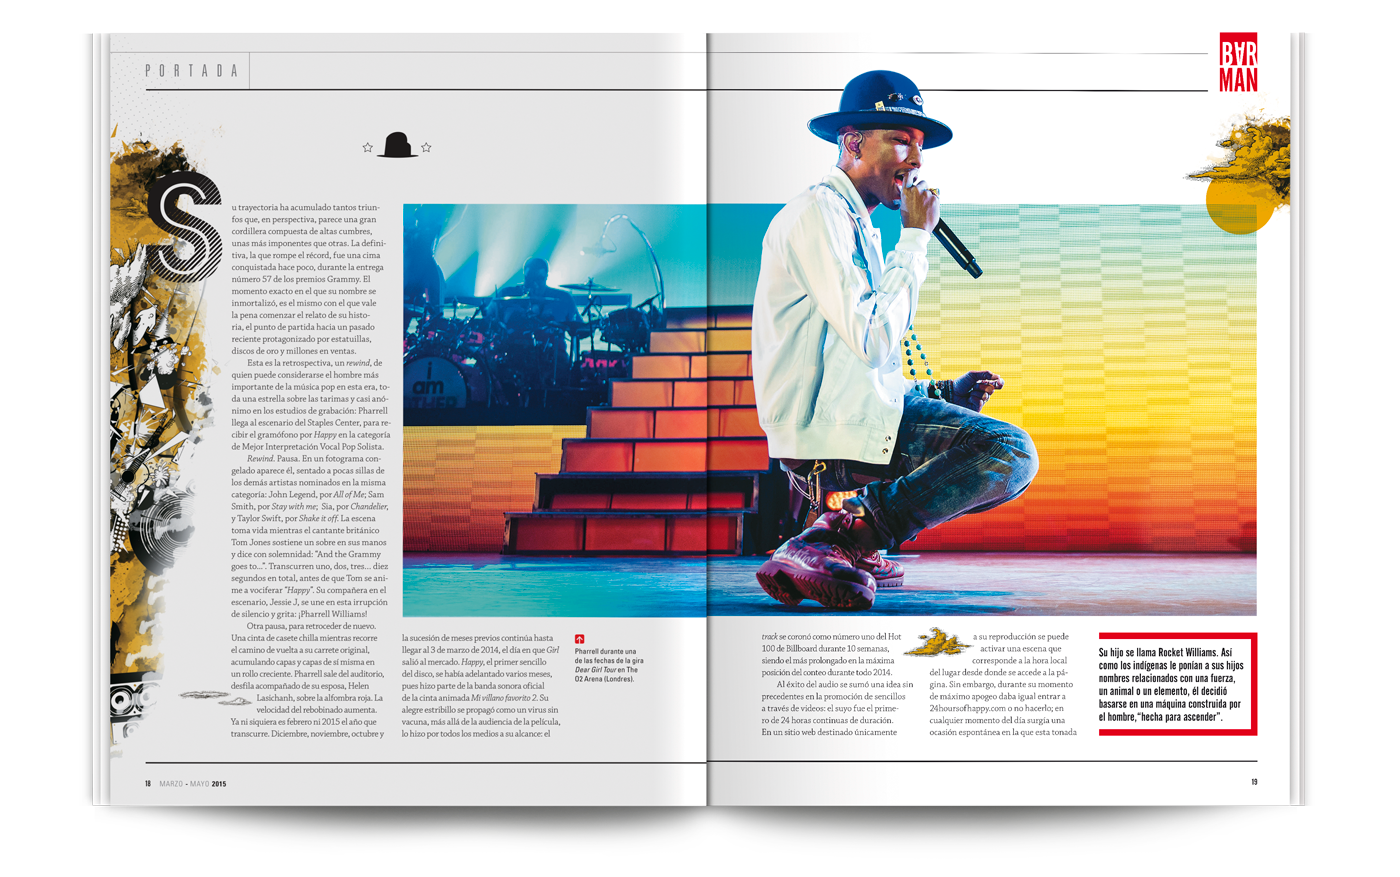 madonna Jayz daft punk pharrell williams editorial Snoop Dogg hiphop happy Michael Jackson blurred lines